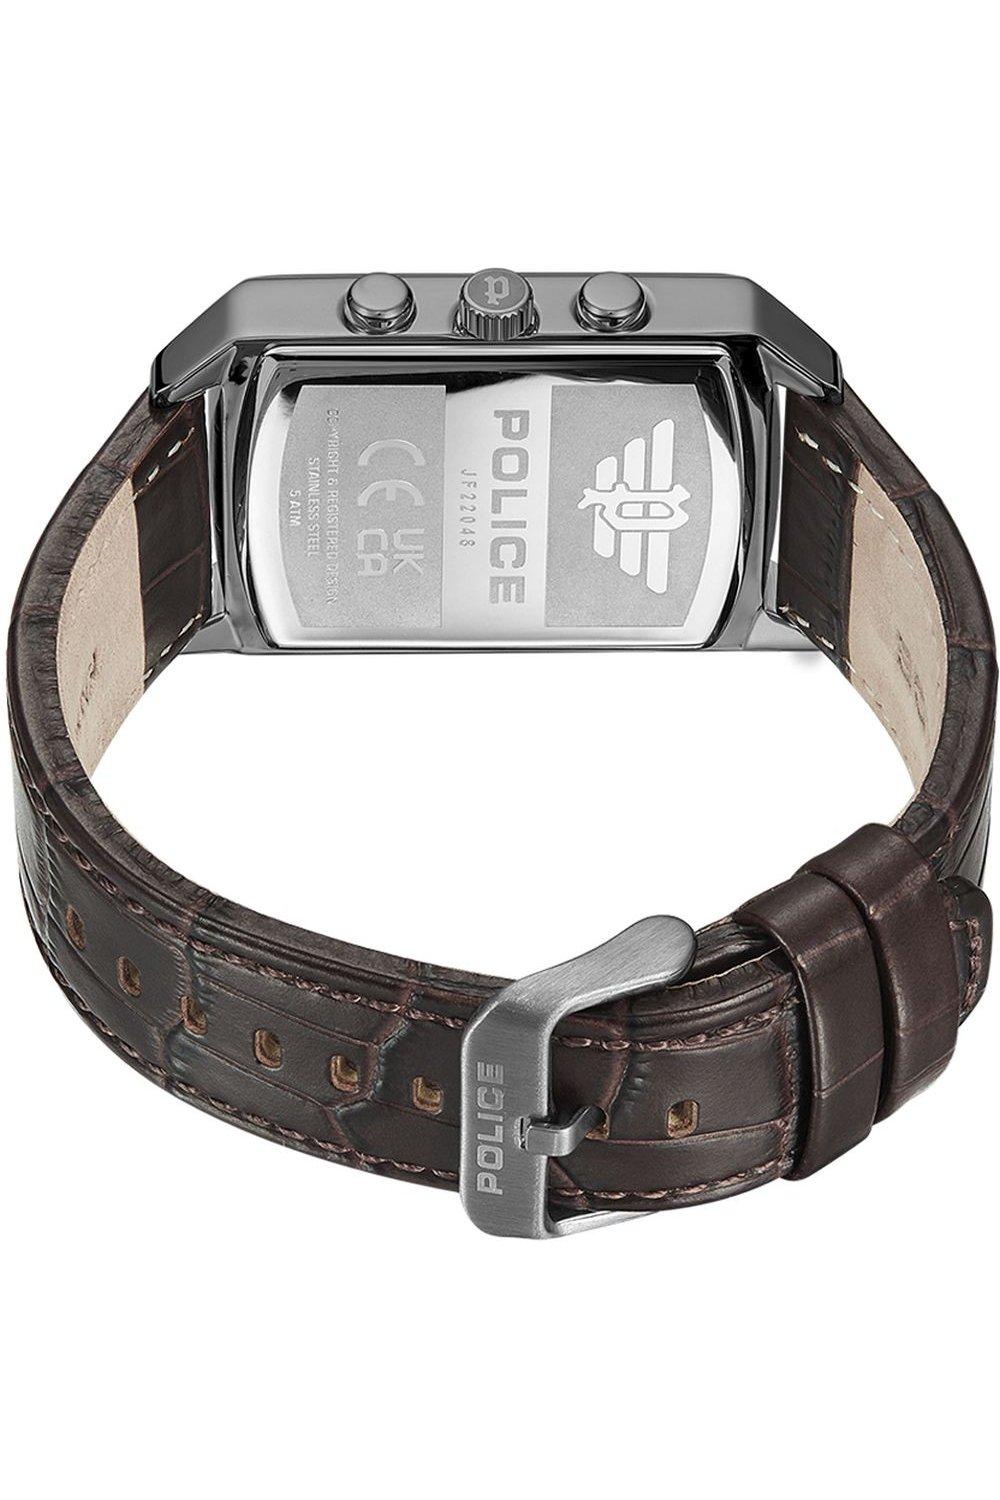 Police Saleve Pewjf2204802 Steel | Stainless Watches Fashion Watch Analogue - Quartz |